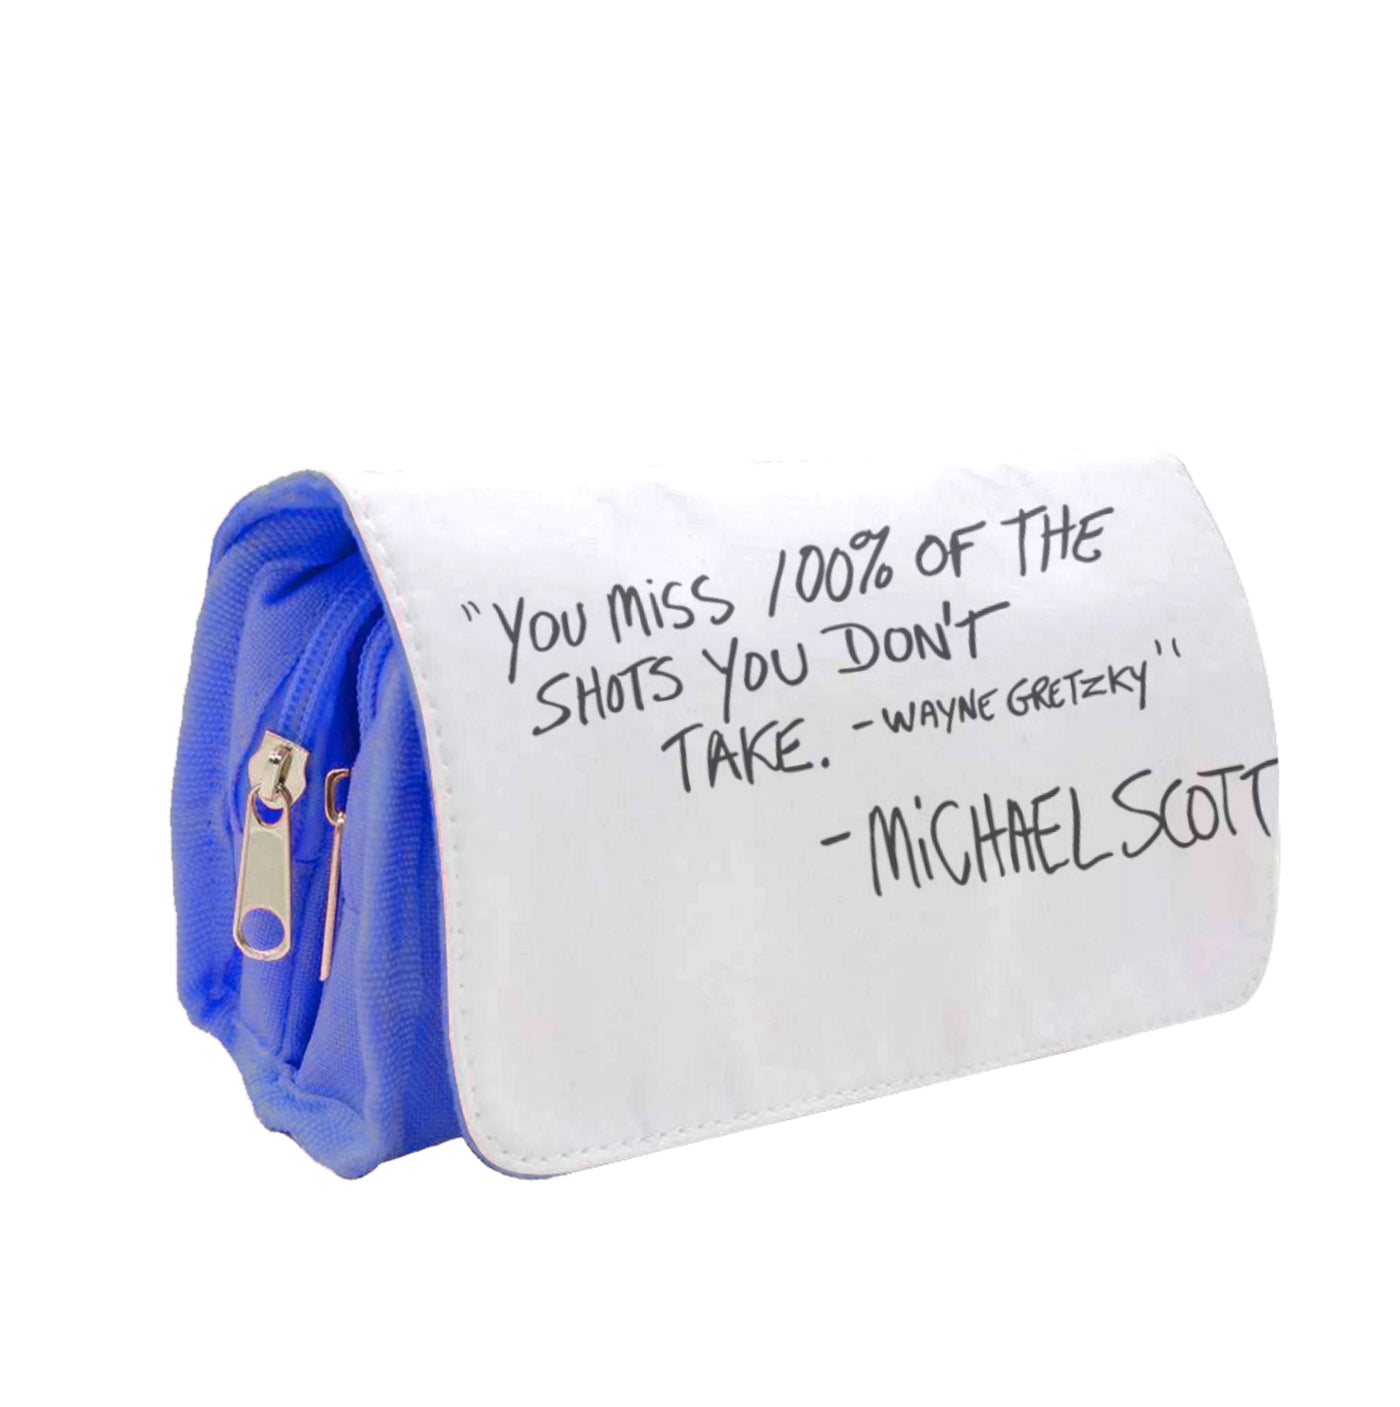 Michael Scott Quote - The Office Pencil Case